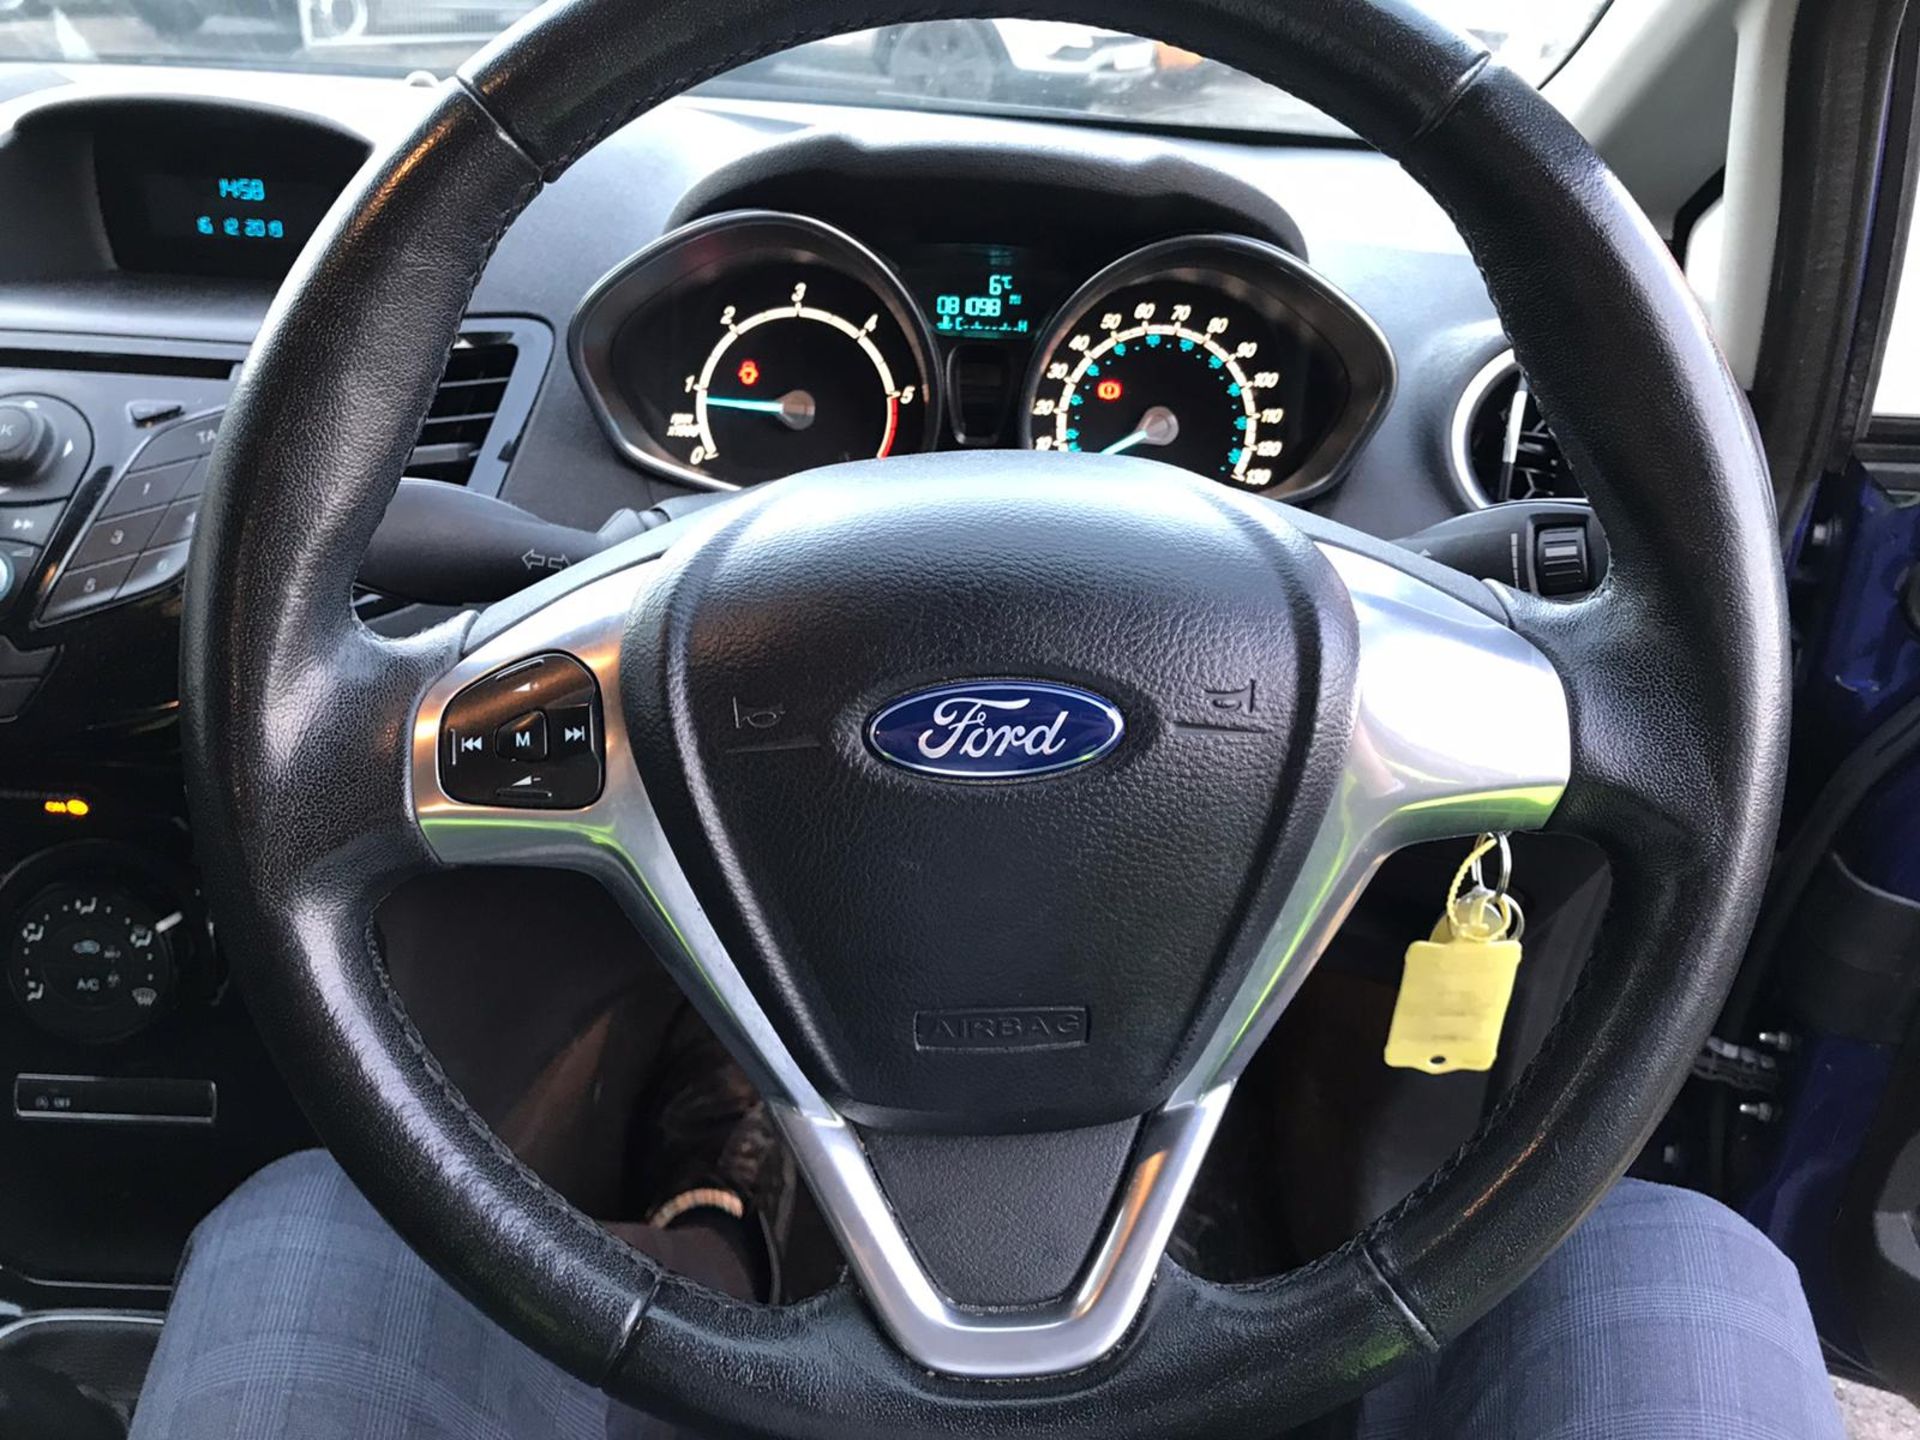 Ford Fiesta Zetec Econectic Tdci 1.6 - Image 18 of 20